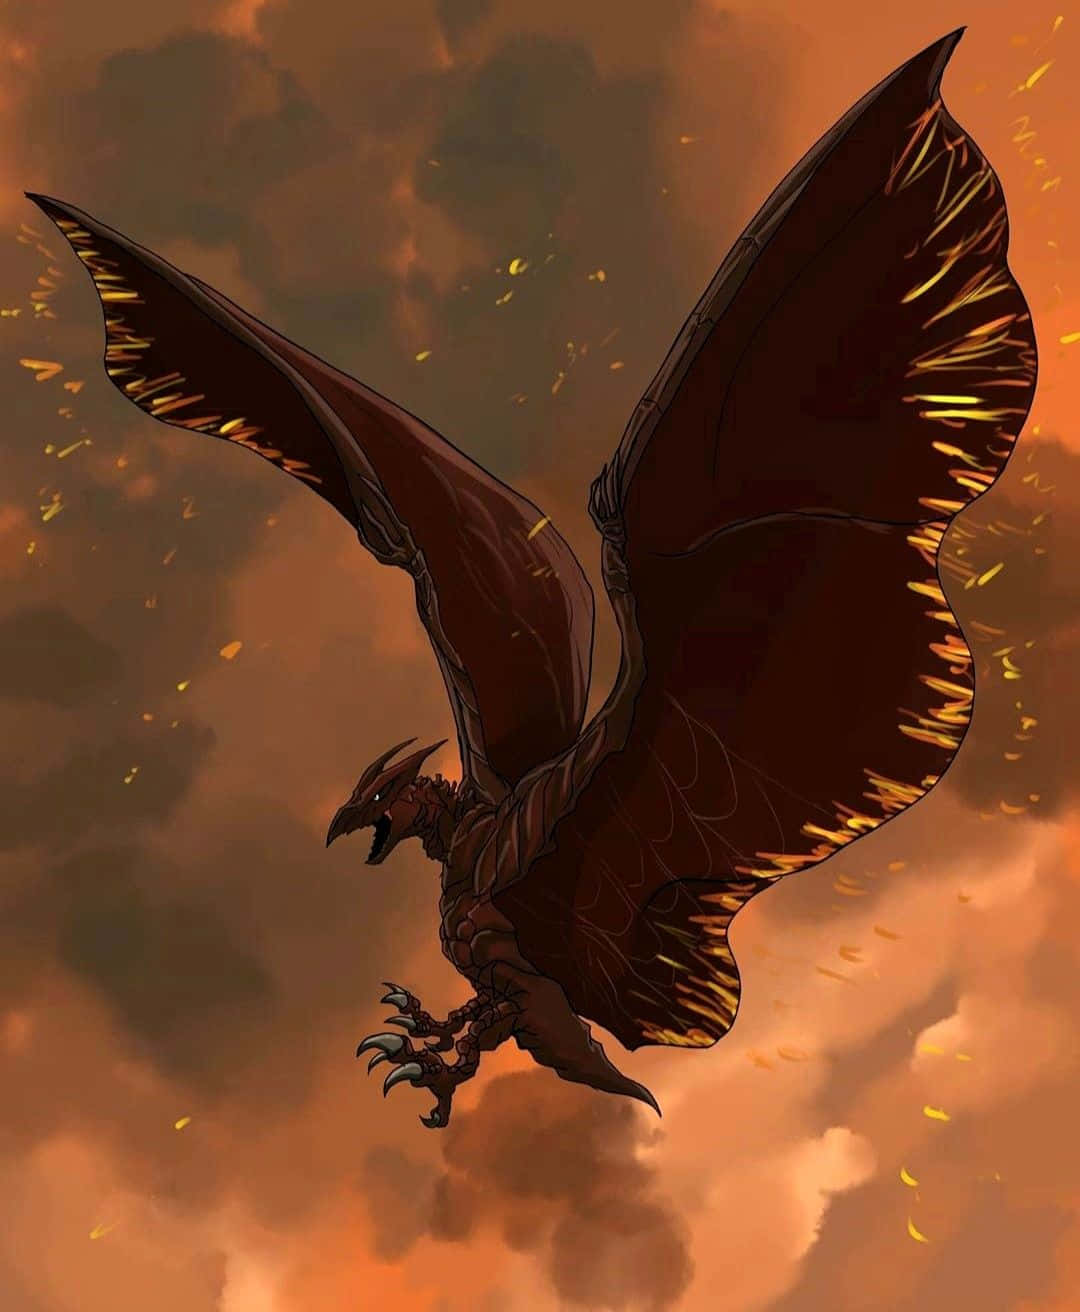 A Rodan, An Impressive And Imposing Bird-like Kaiju From The Toho Kaiju Universe, Soars Across The Sky Above. Background